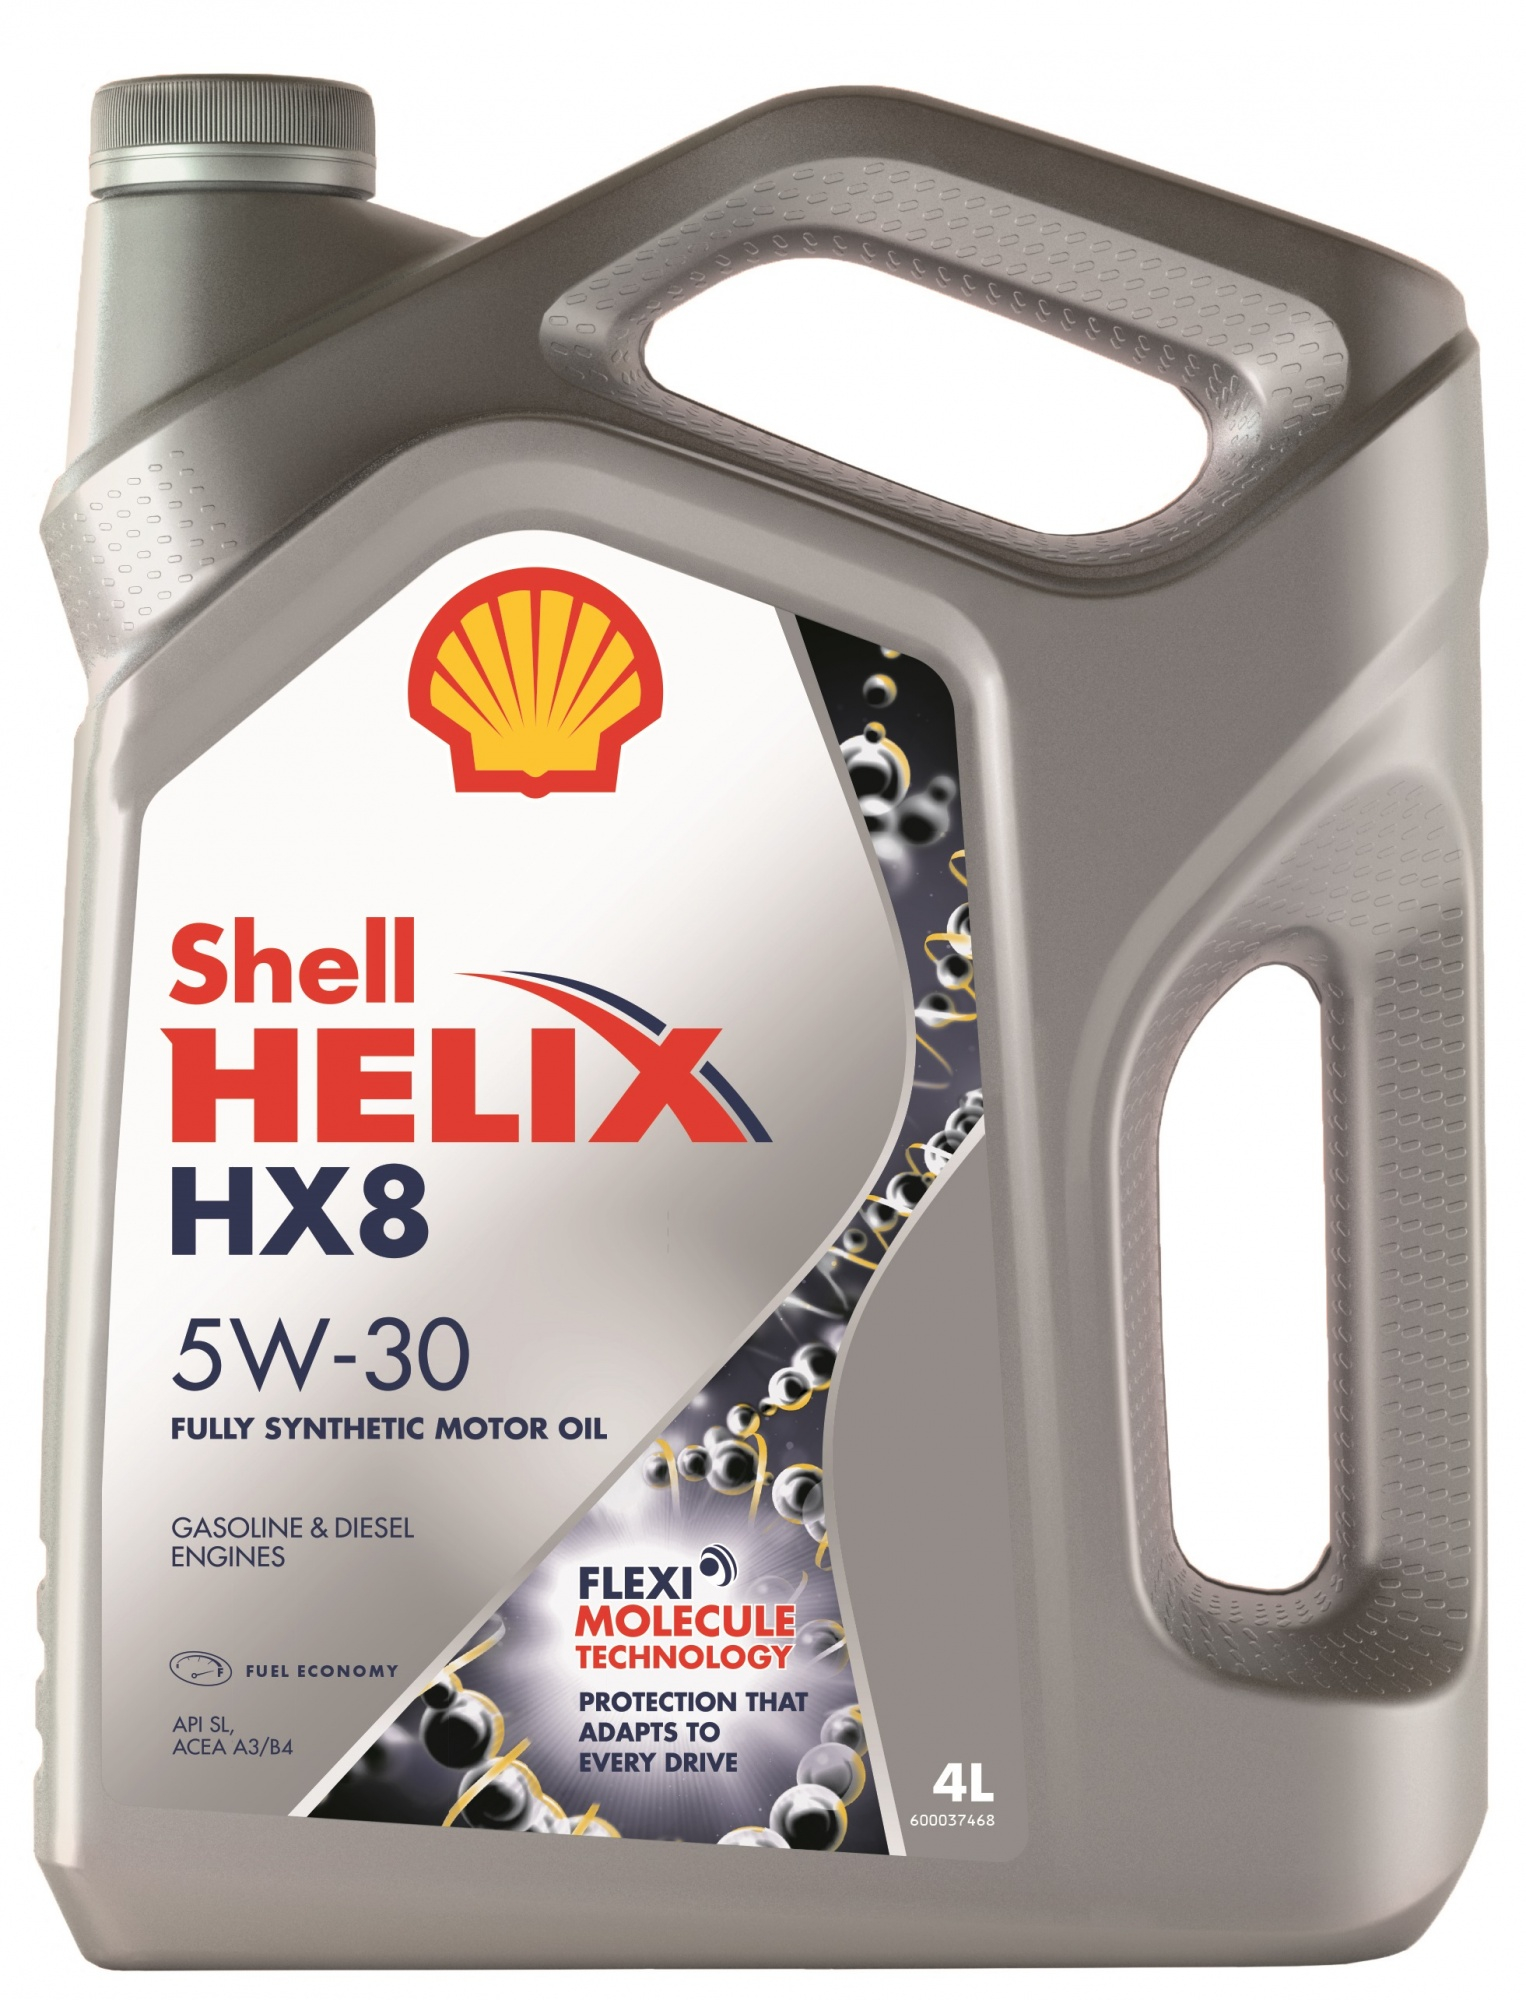 Моторное масло Shell Helix HX8 5W-30, 550046364, 4л